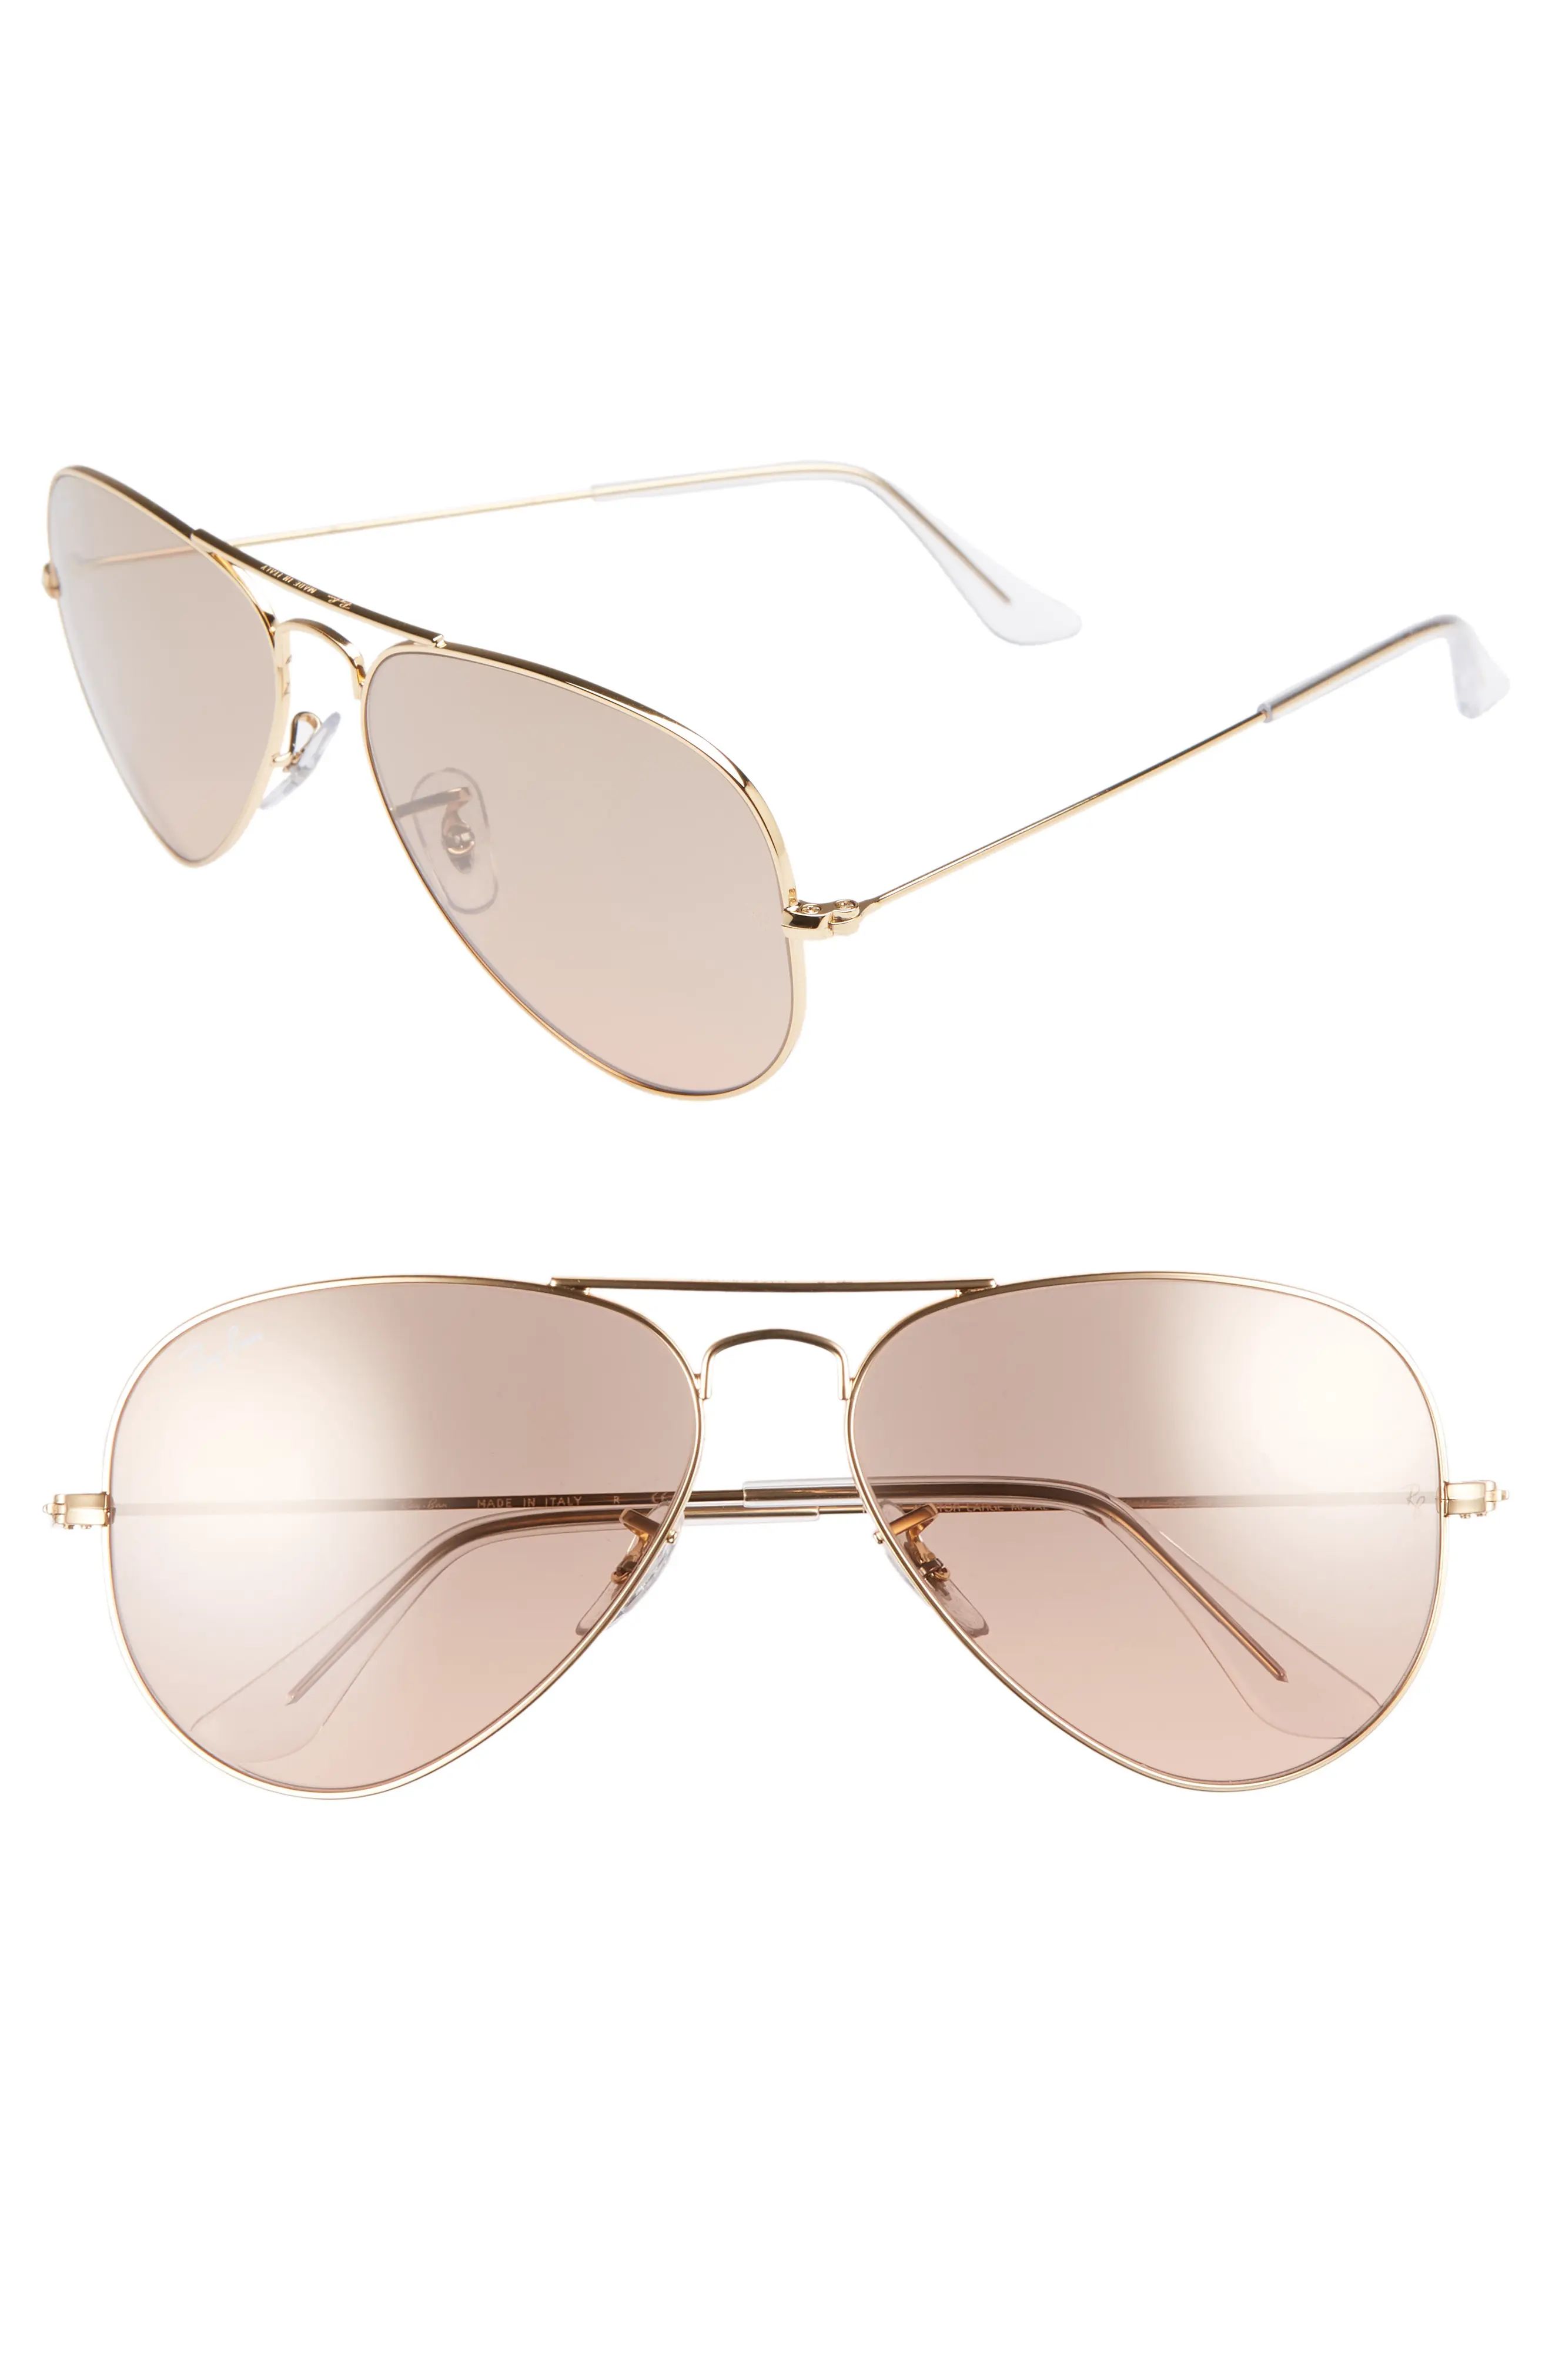 Ray-Ban Standard Original 58mm Aviator Sunglasses in Gold/Pink Mirror at Nordstrom | Nordstrom